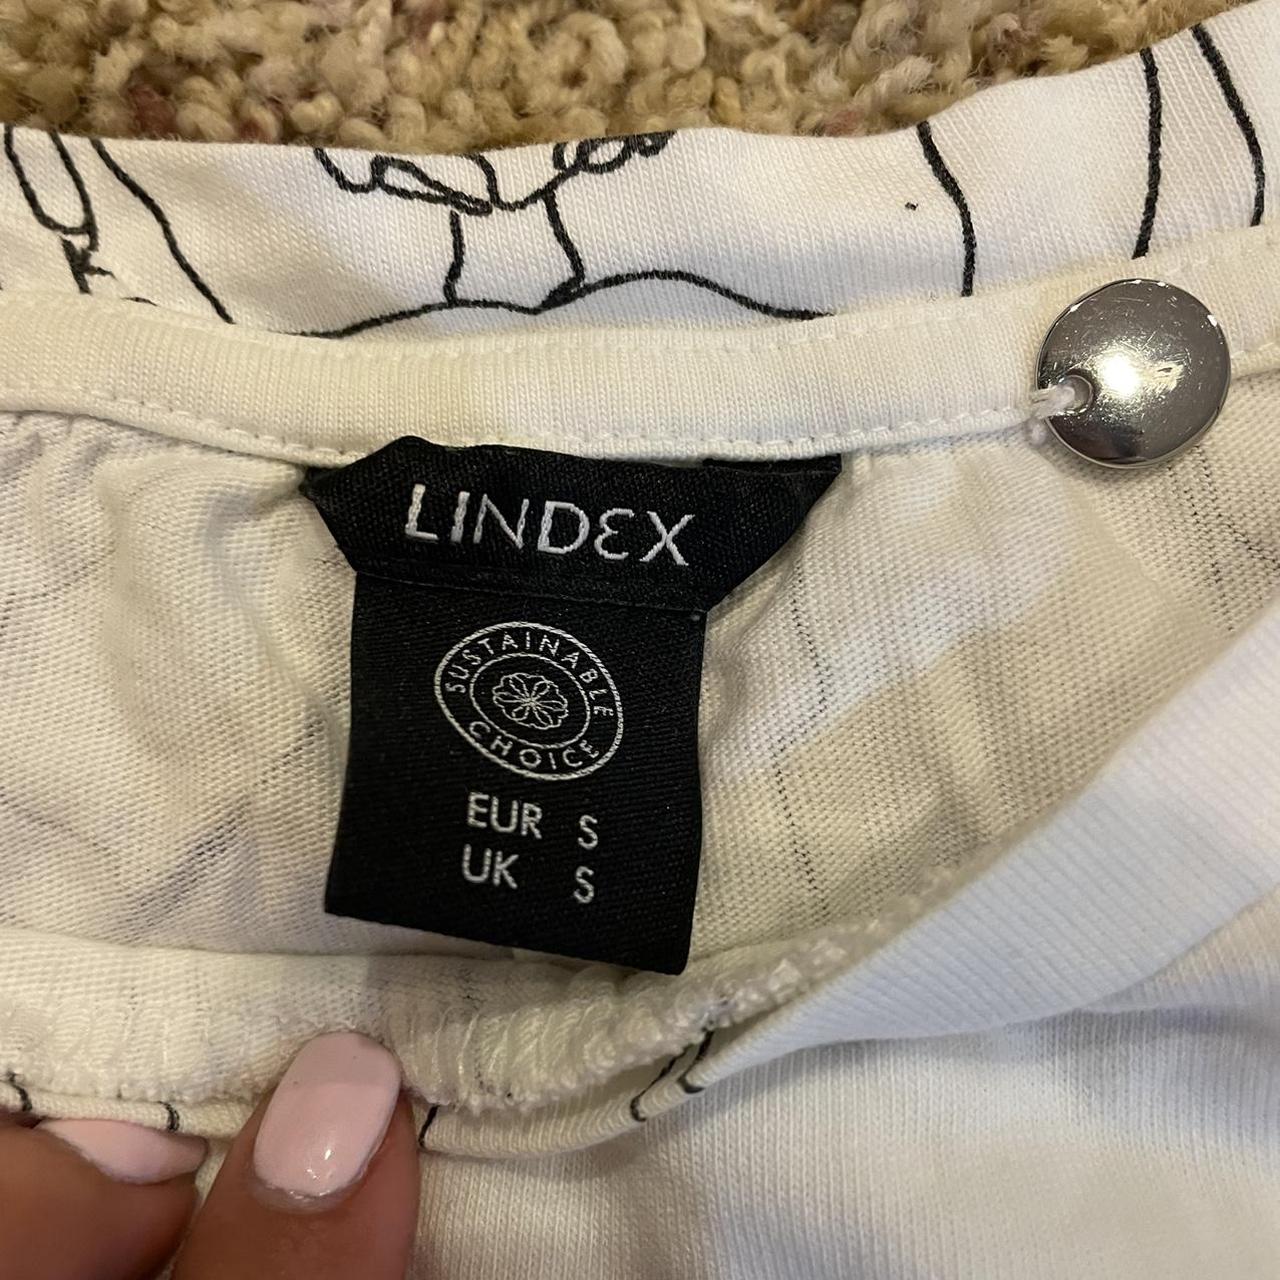 Product Image 4 - Lindex white tshirt with black